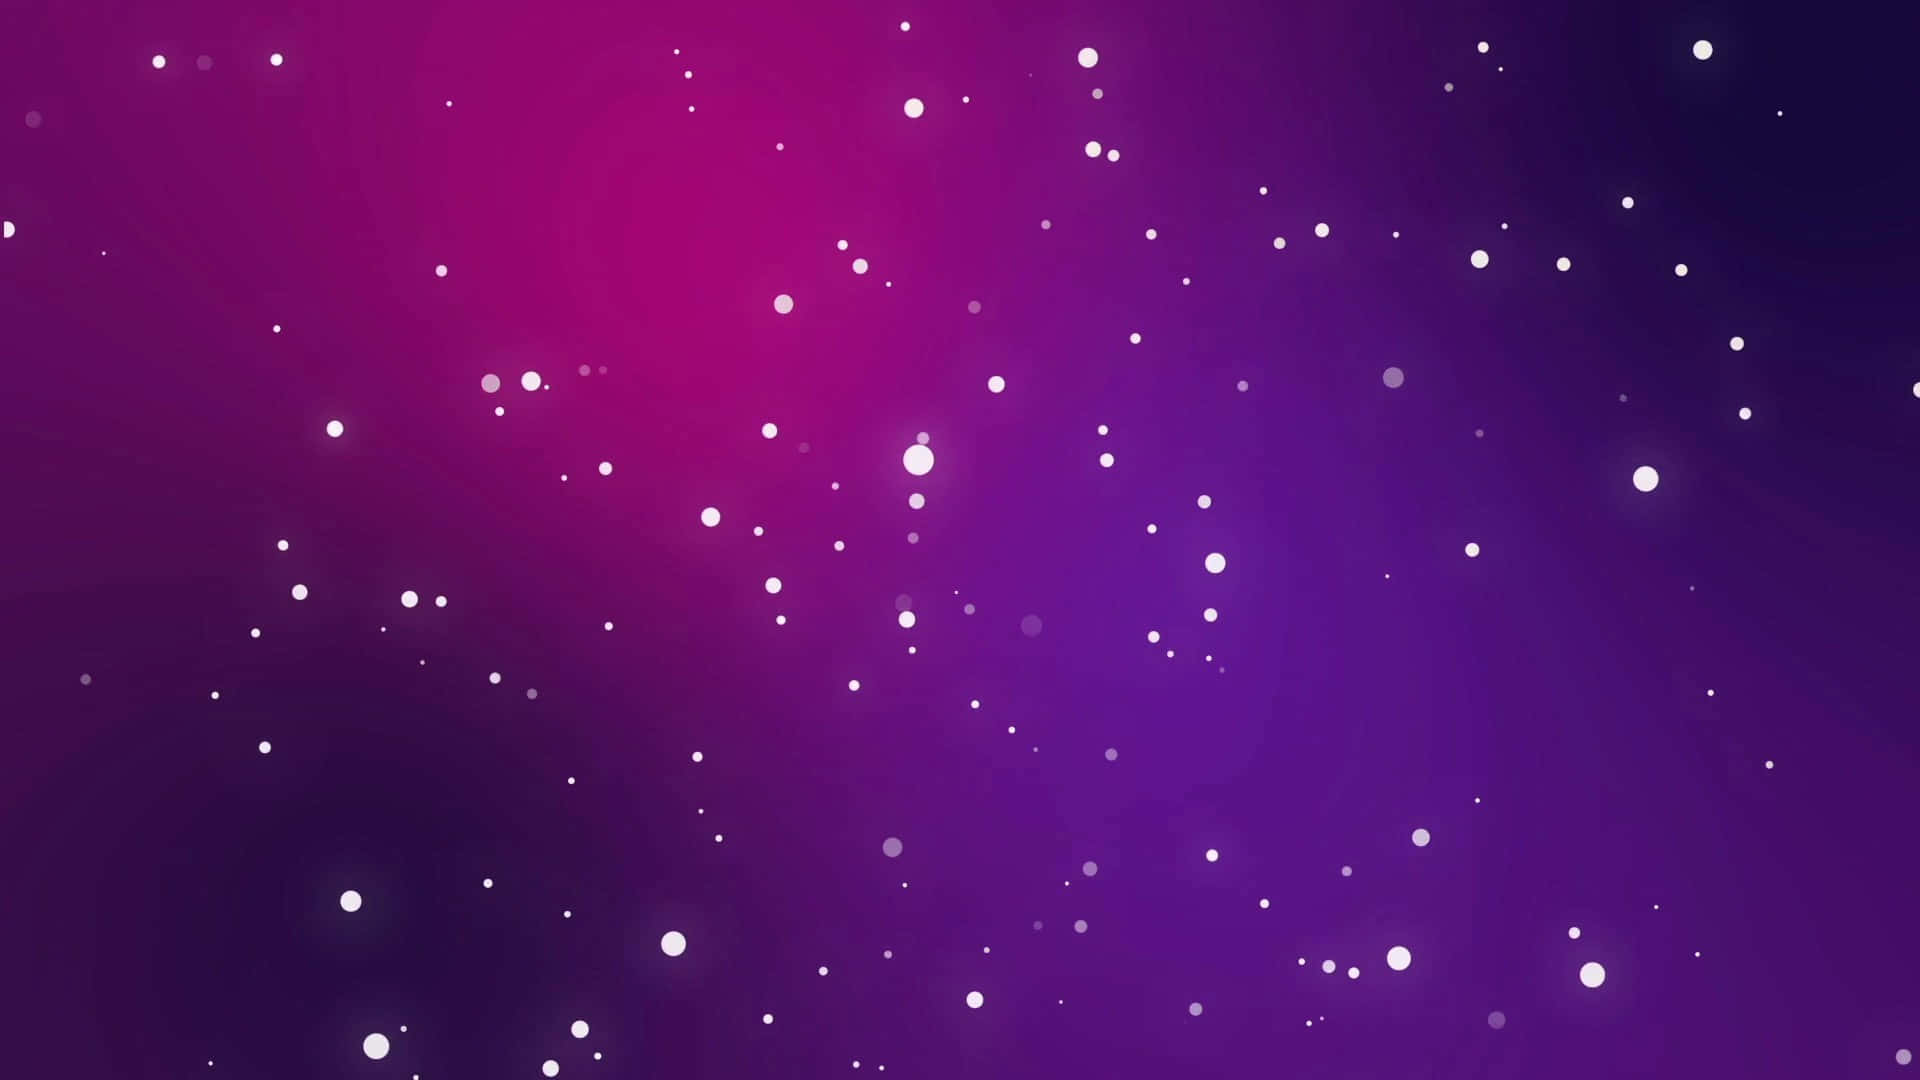 Celestial Purple Star Explosion